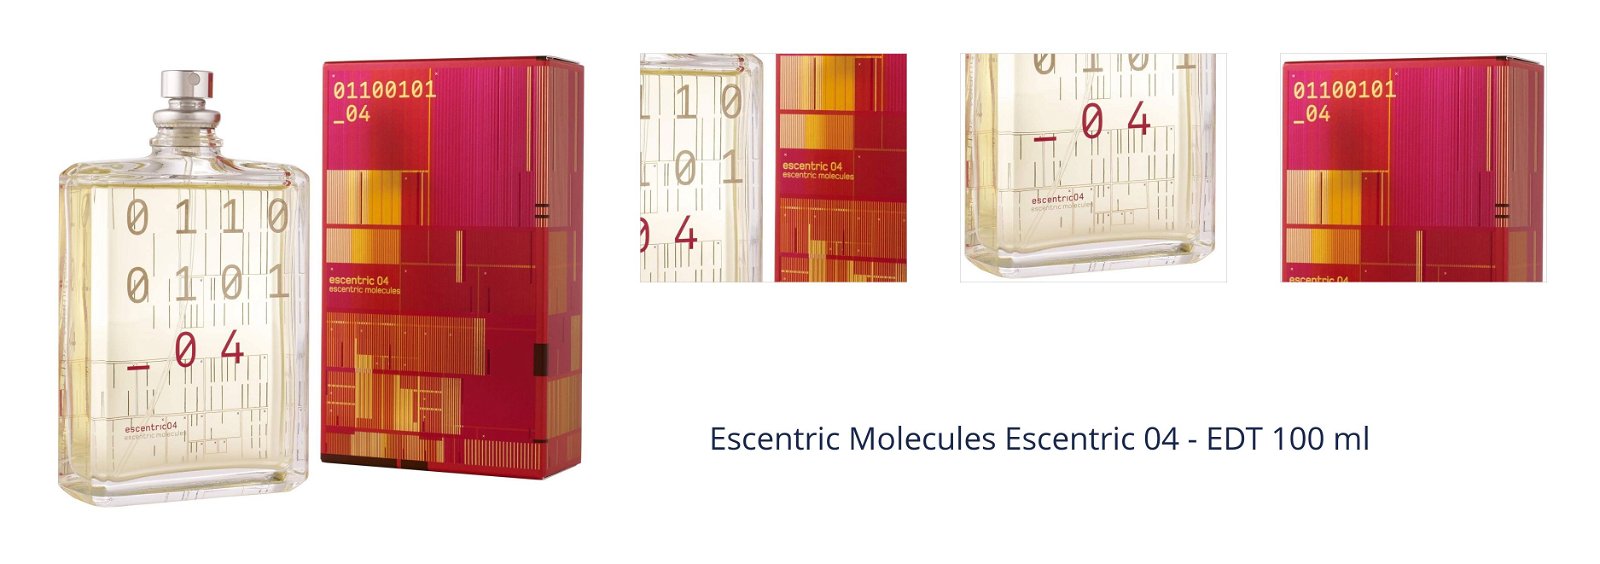 Escentric Molecules Escentric 04 - EDT 100 ml 1